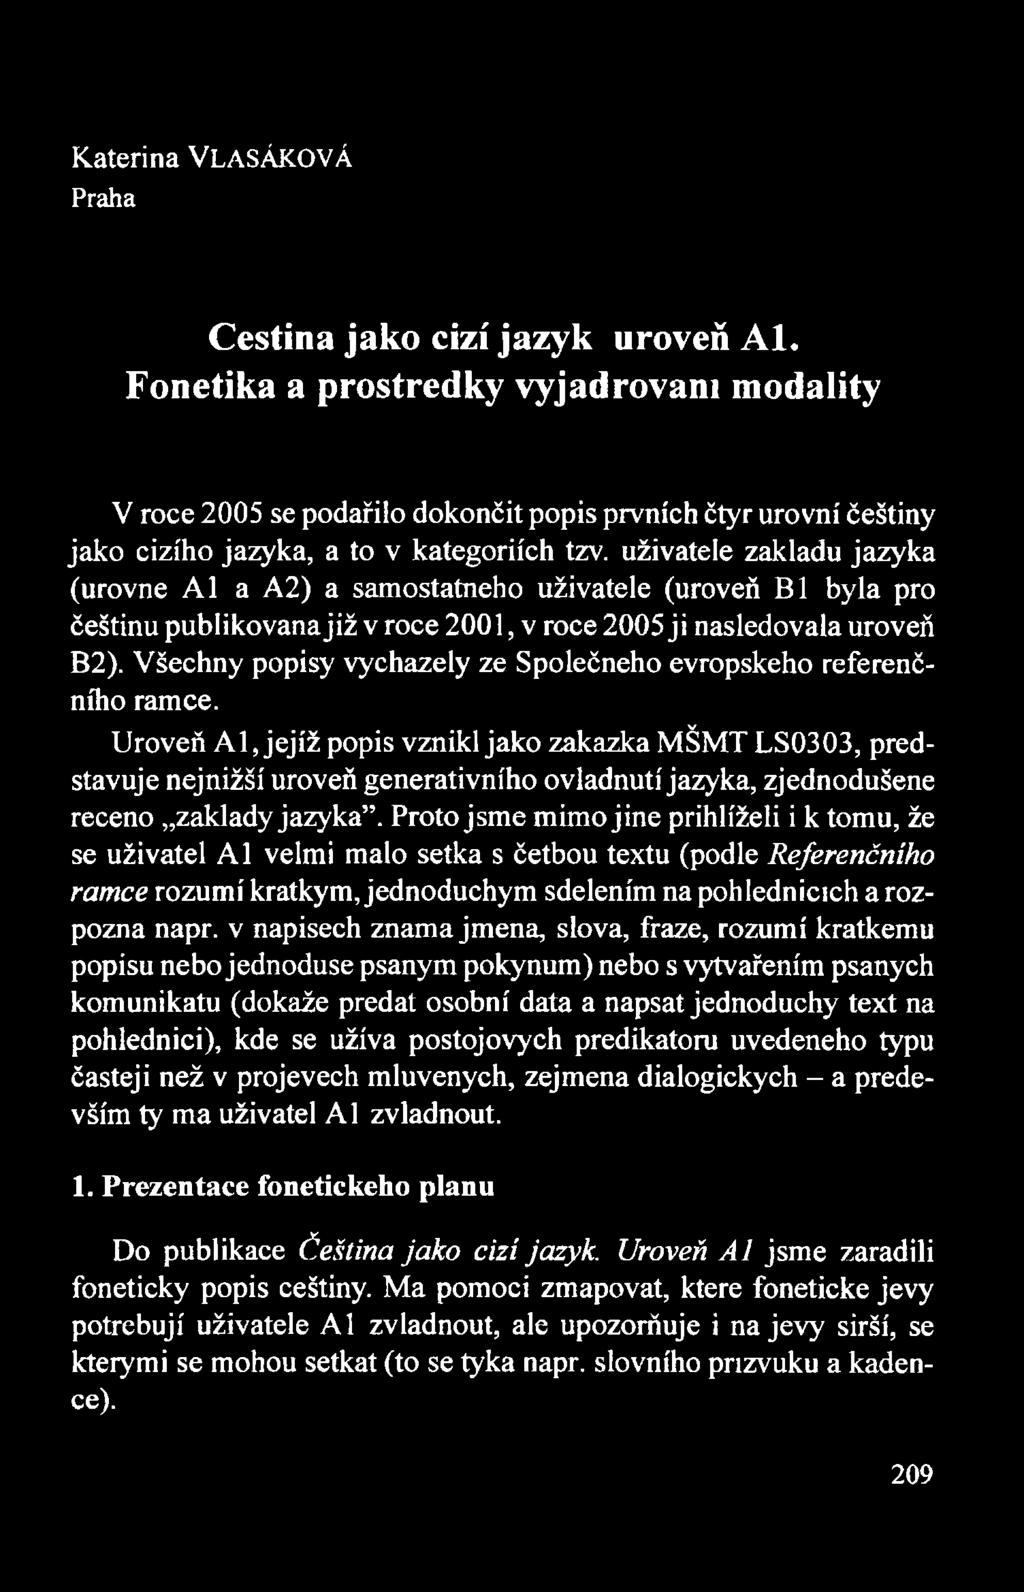 użivatele zakładu jazyka (urovne A l a A2) a samostatneho użivatele (uroveń BI była pro ćeśtinu publikovanajiż v roce 2001, v roce 2005 ji nasledovała uroveń B2).